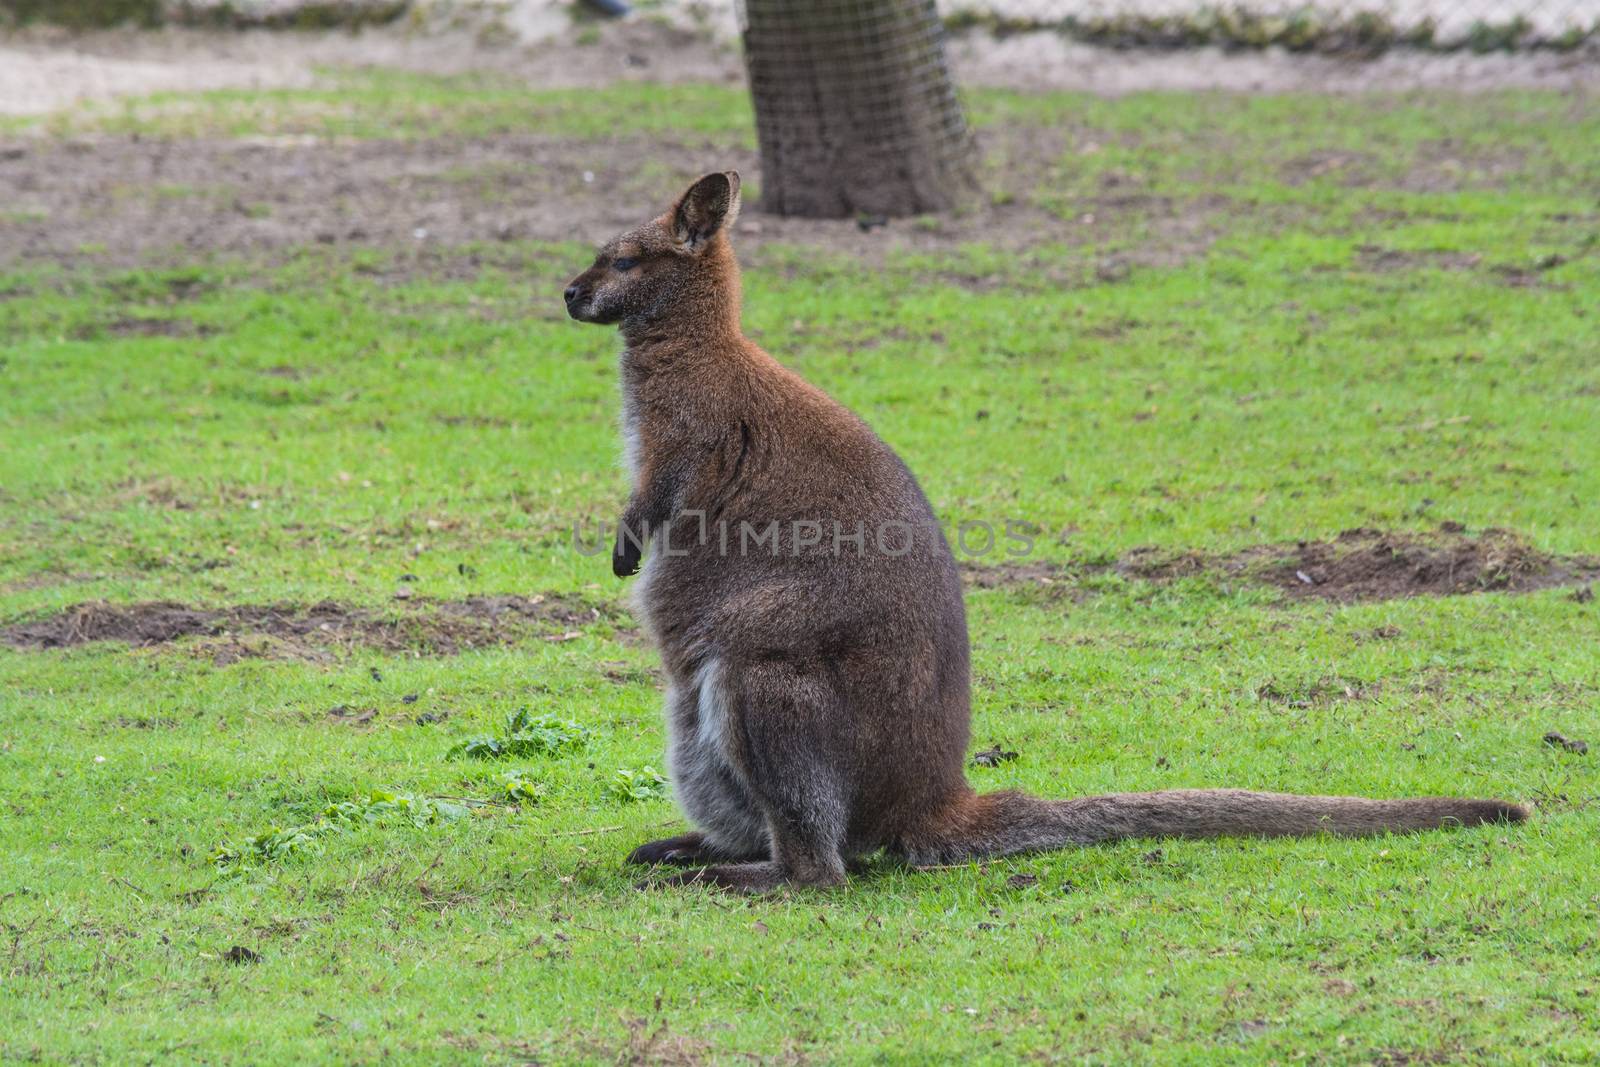 Kangaroo, swamp wallaby (Wallabia bicolor) (Macropus giganteus) in its natural habitat in the grass.